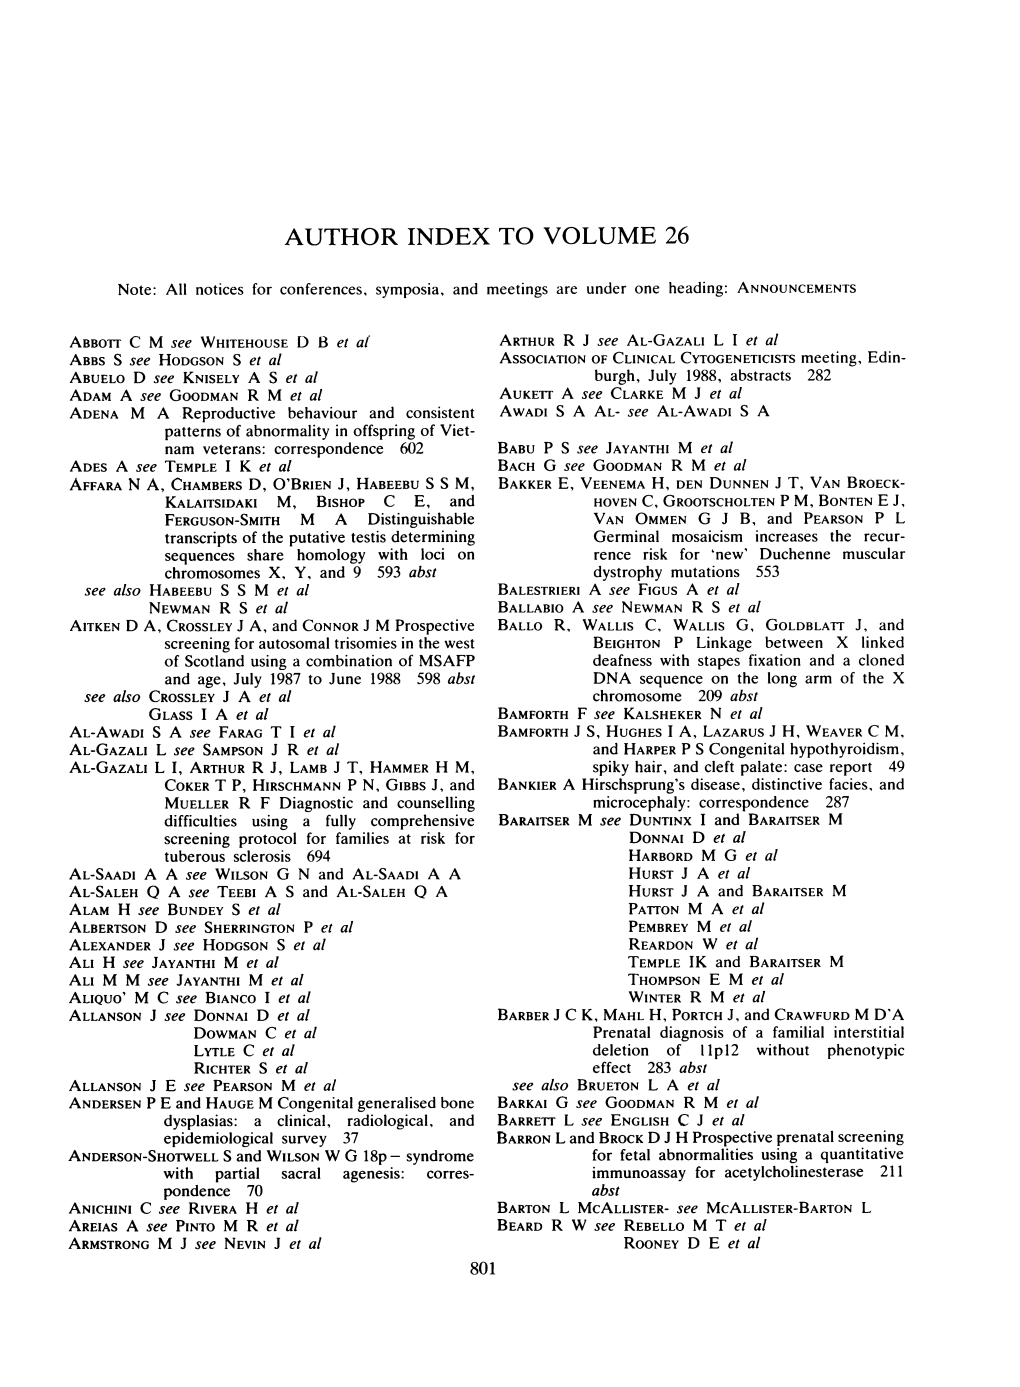 Author Index to Volume 26